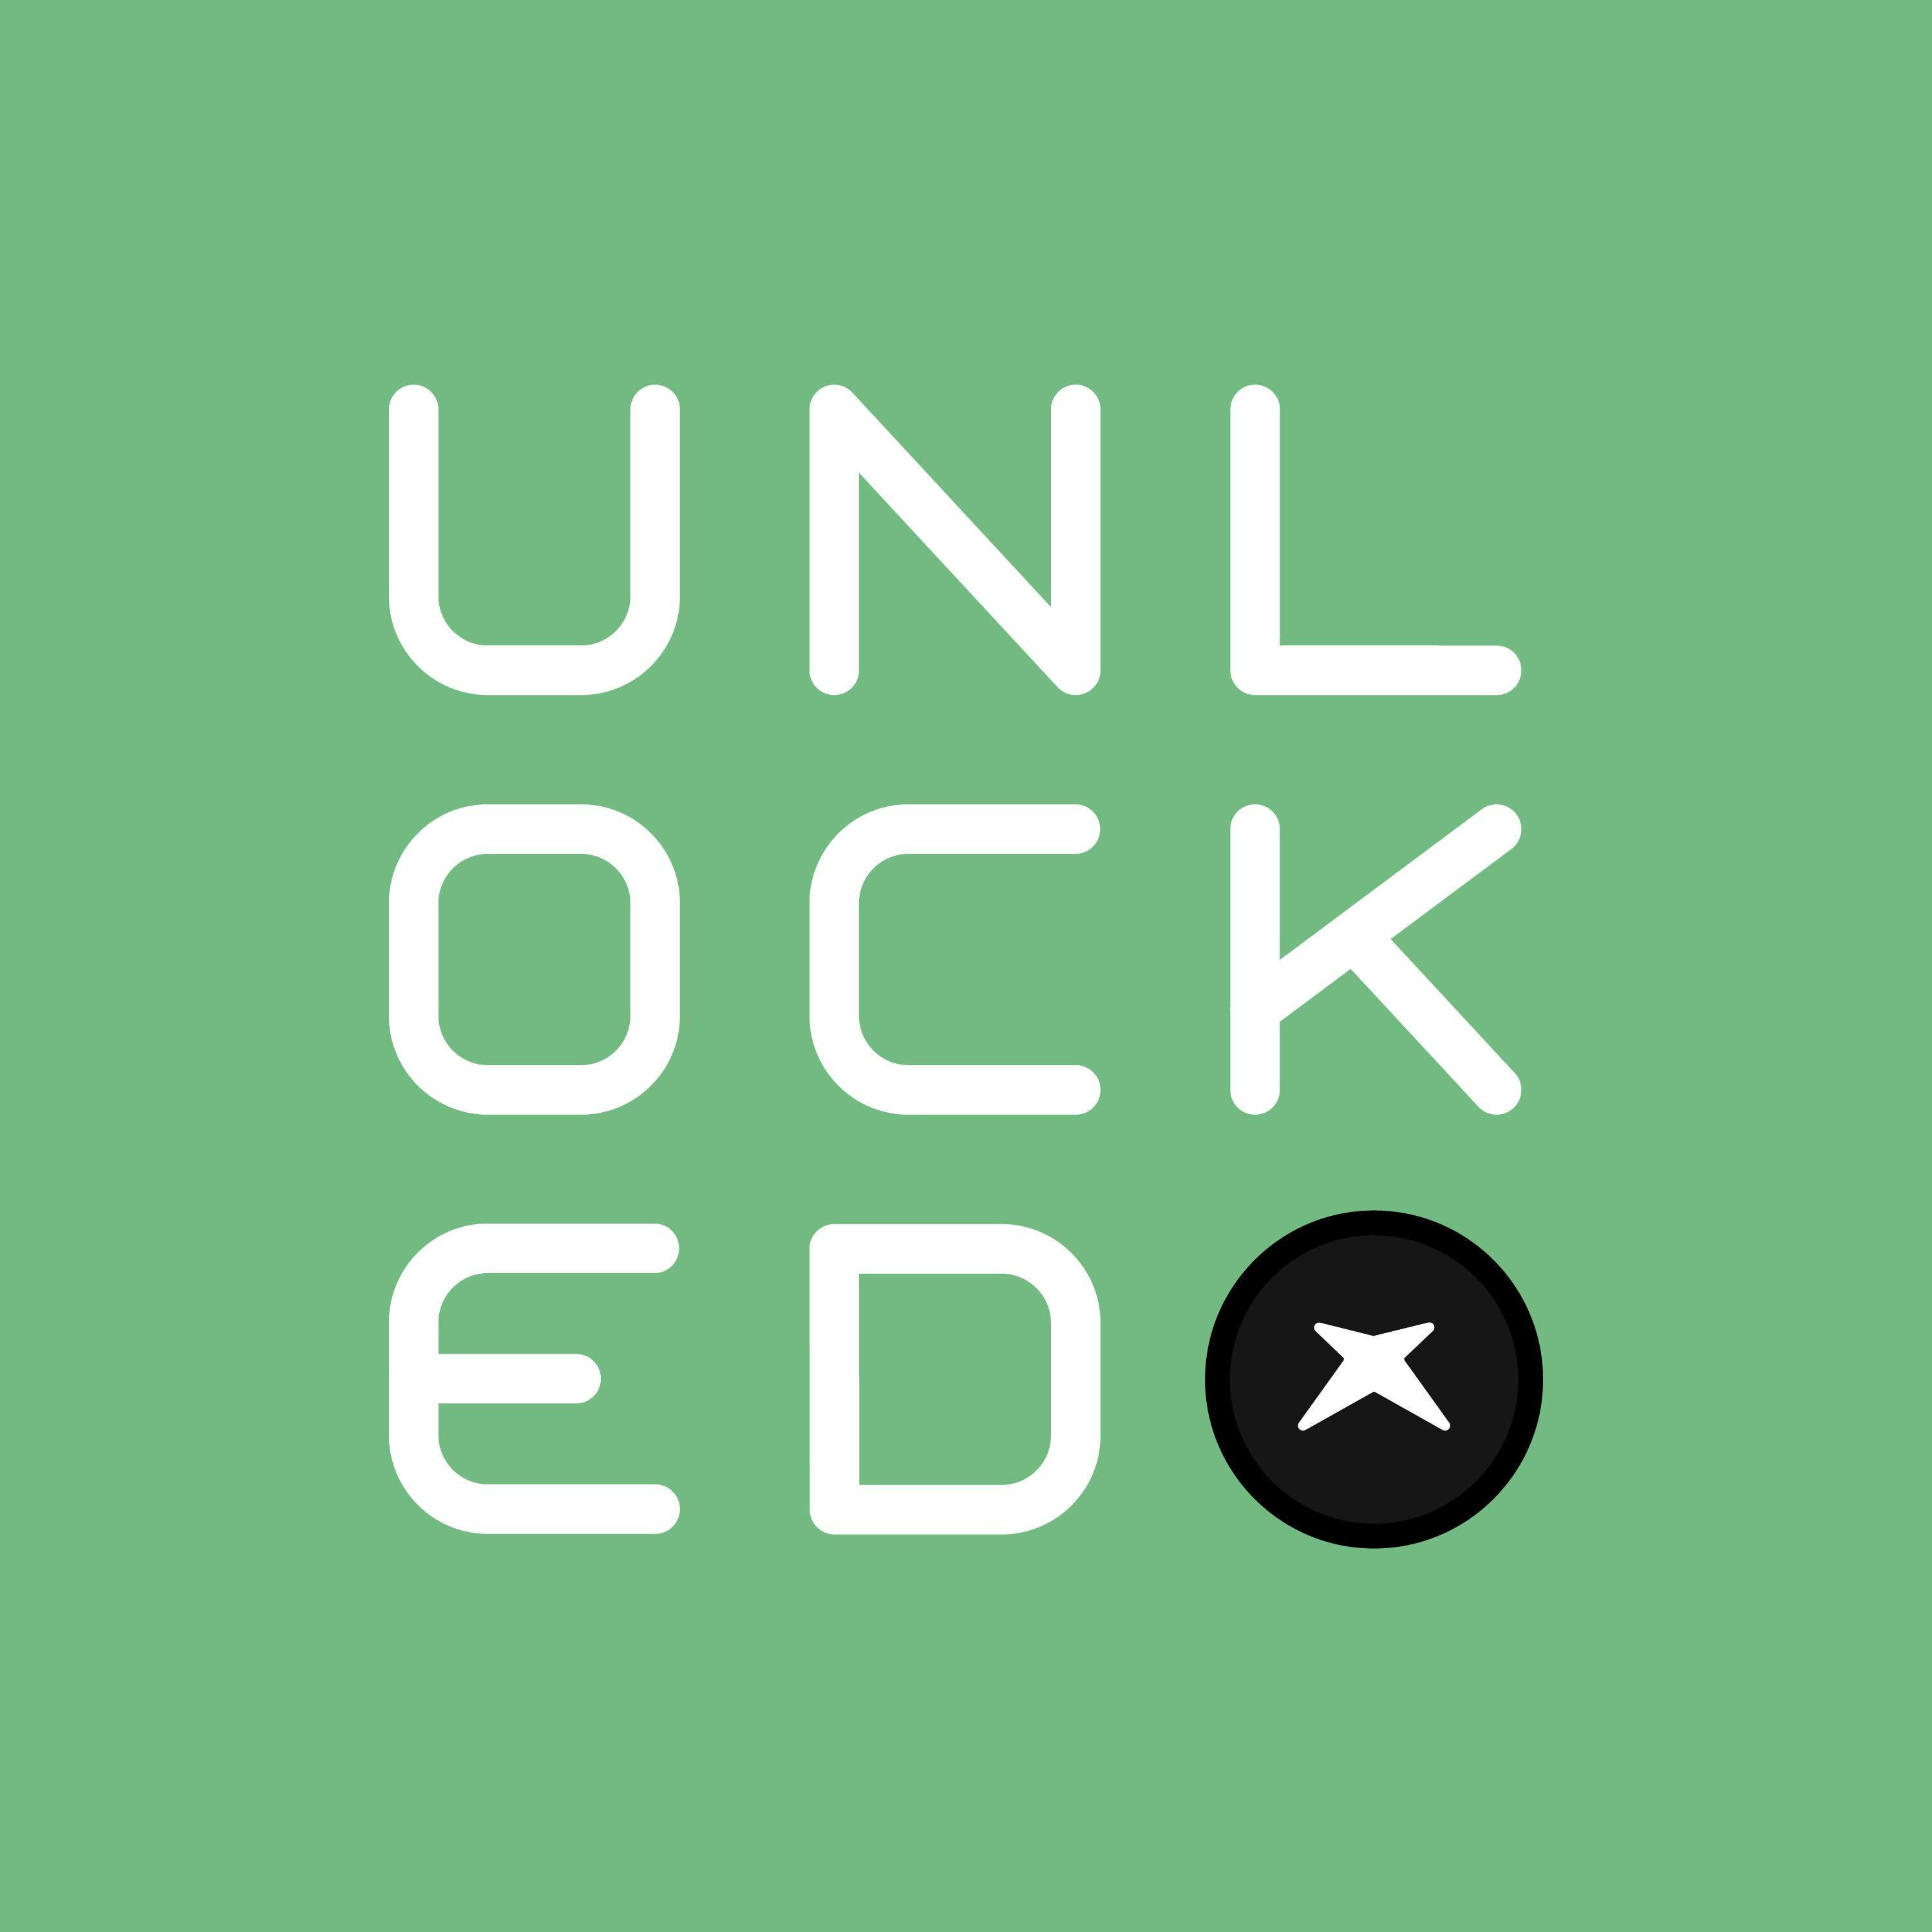 Podcast Unlocked Episode 177: Let's Buy the Blinx Trademark!